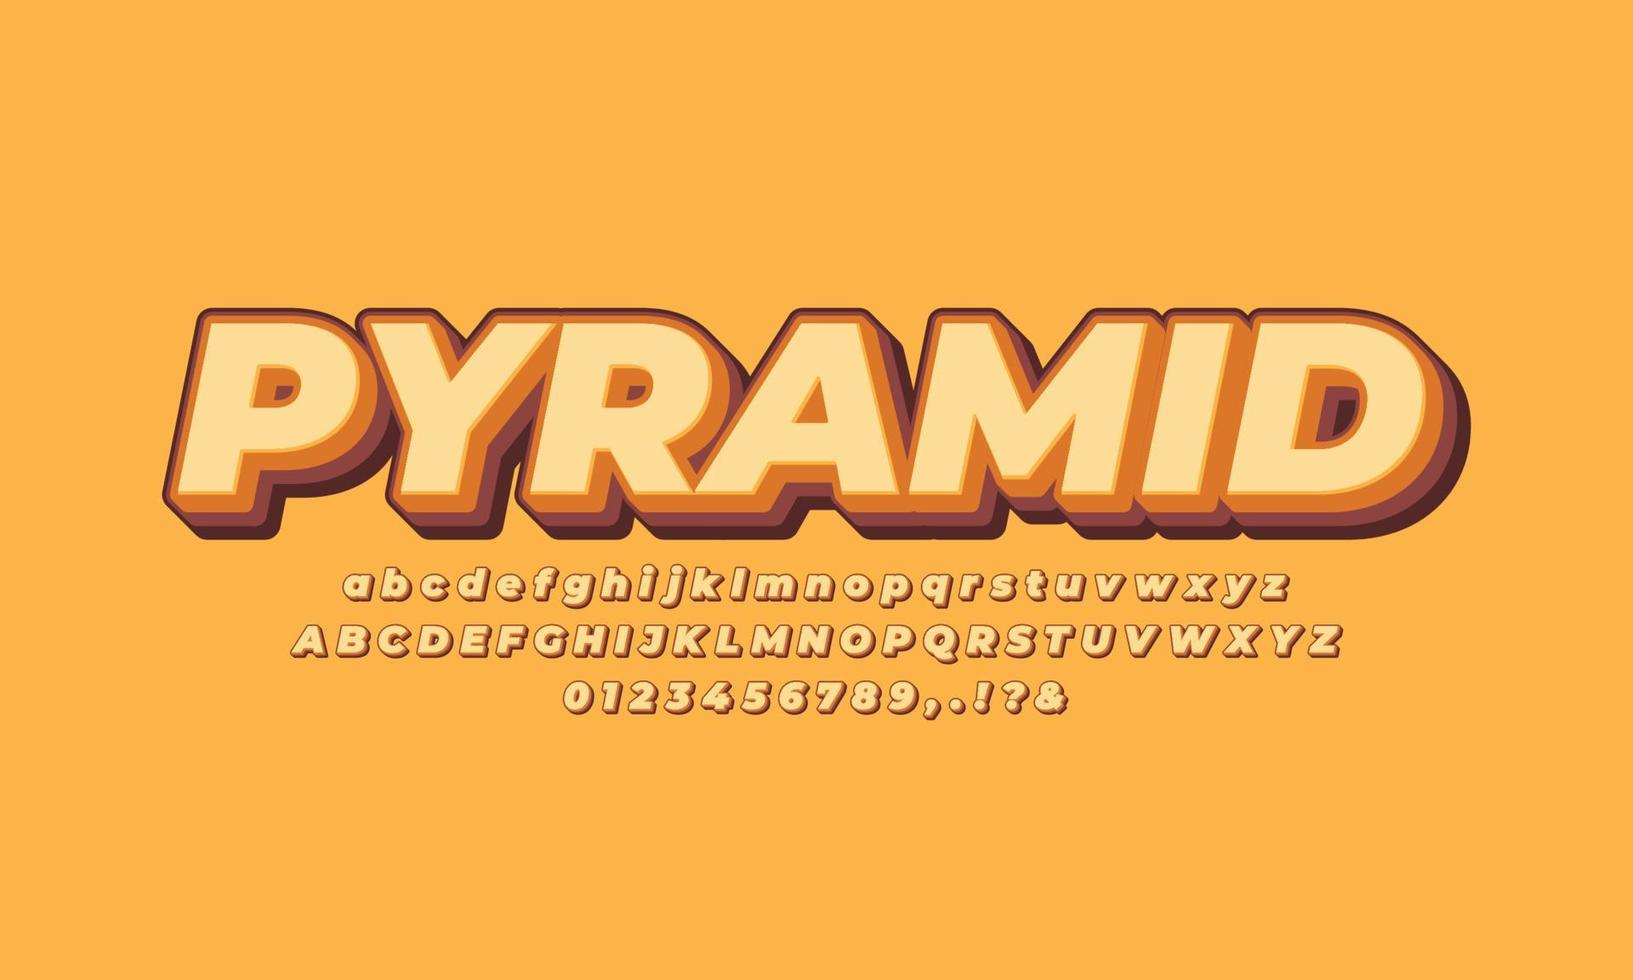 vintage pyramid orange texteffektdesign vektor